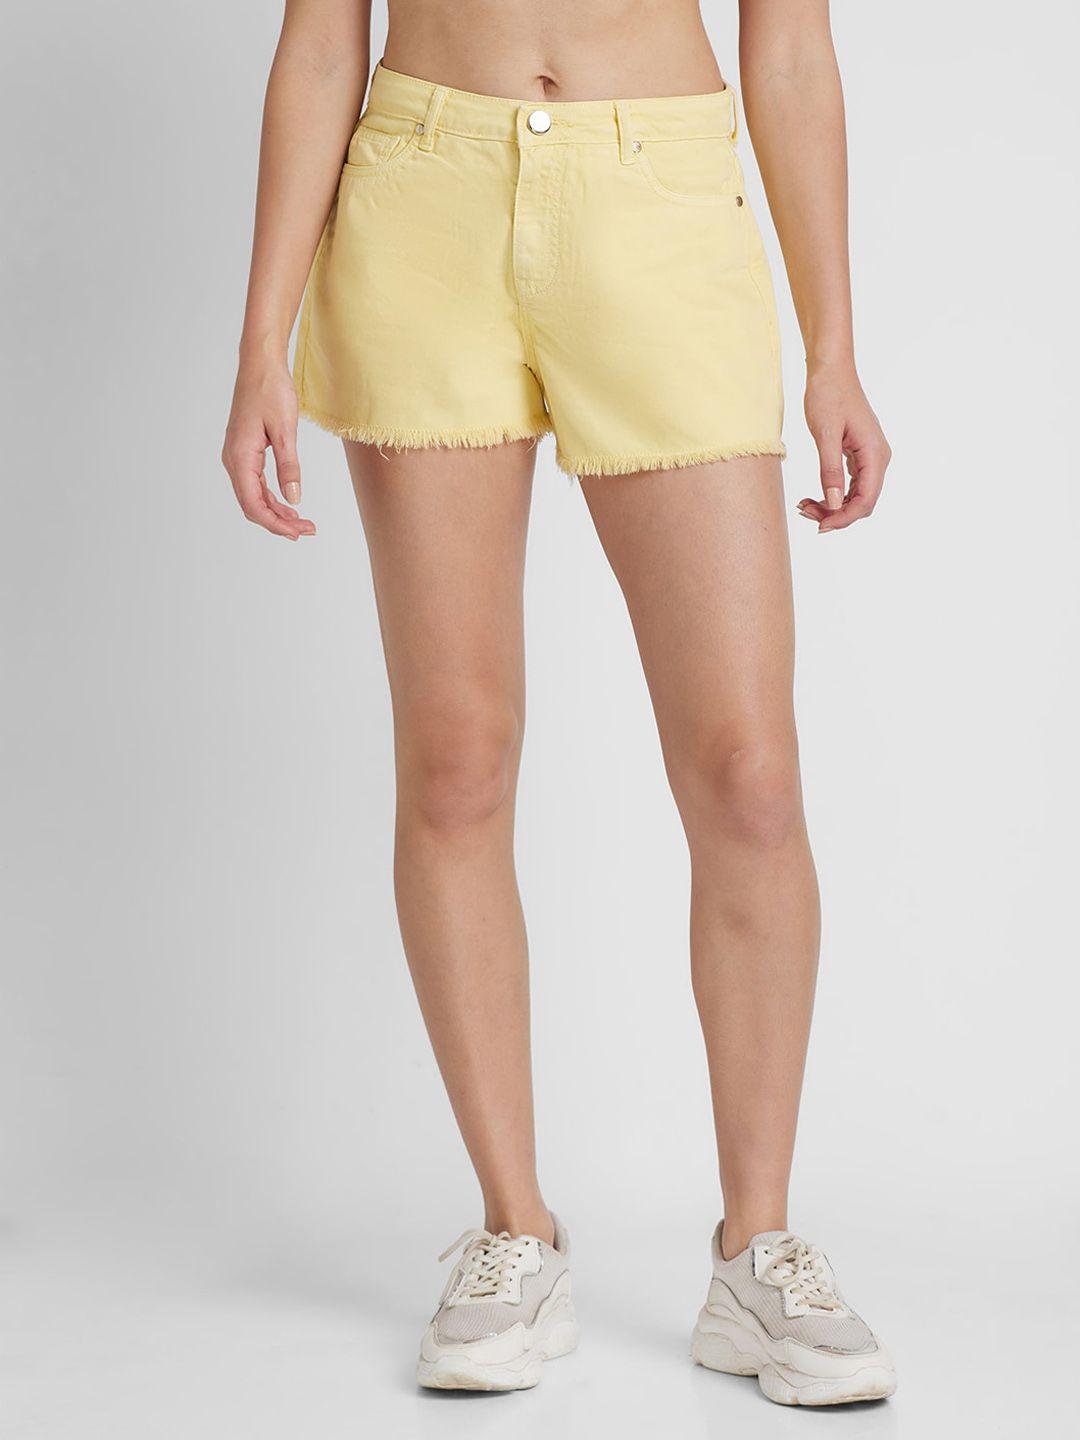 globus-women-mid-rise-denim-shorts